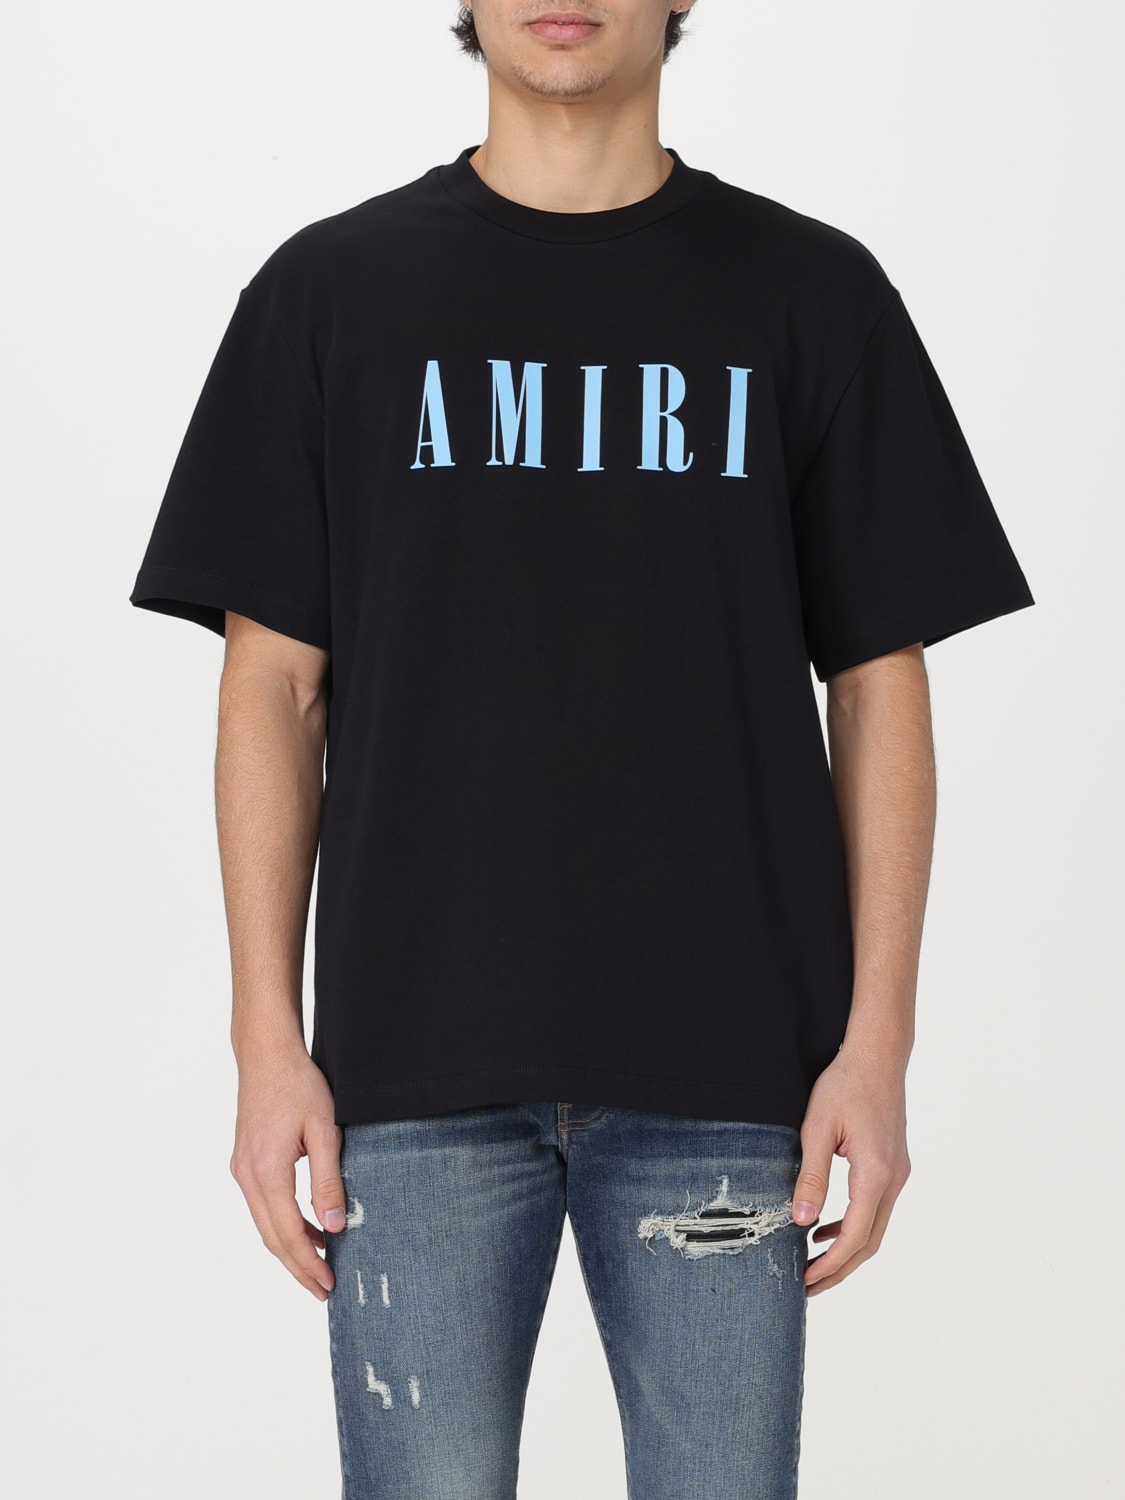 AMIRI Tシャツ身幅55cm